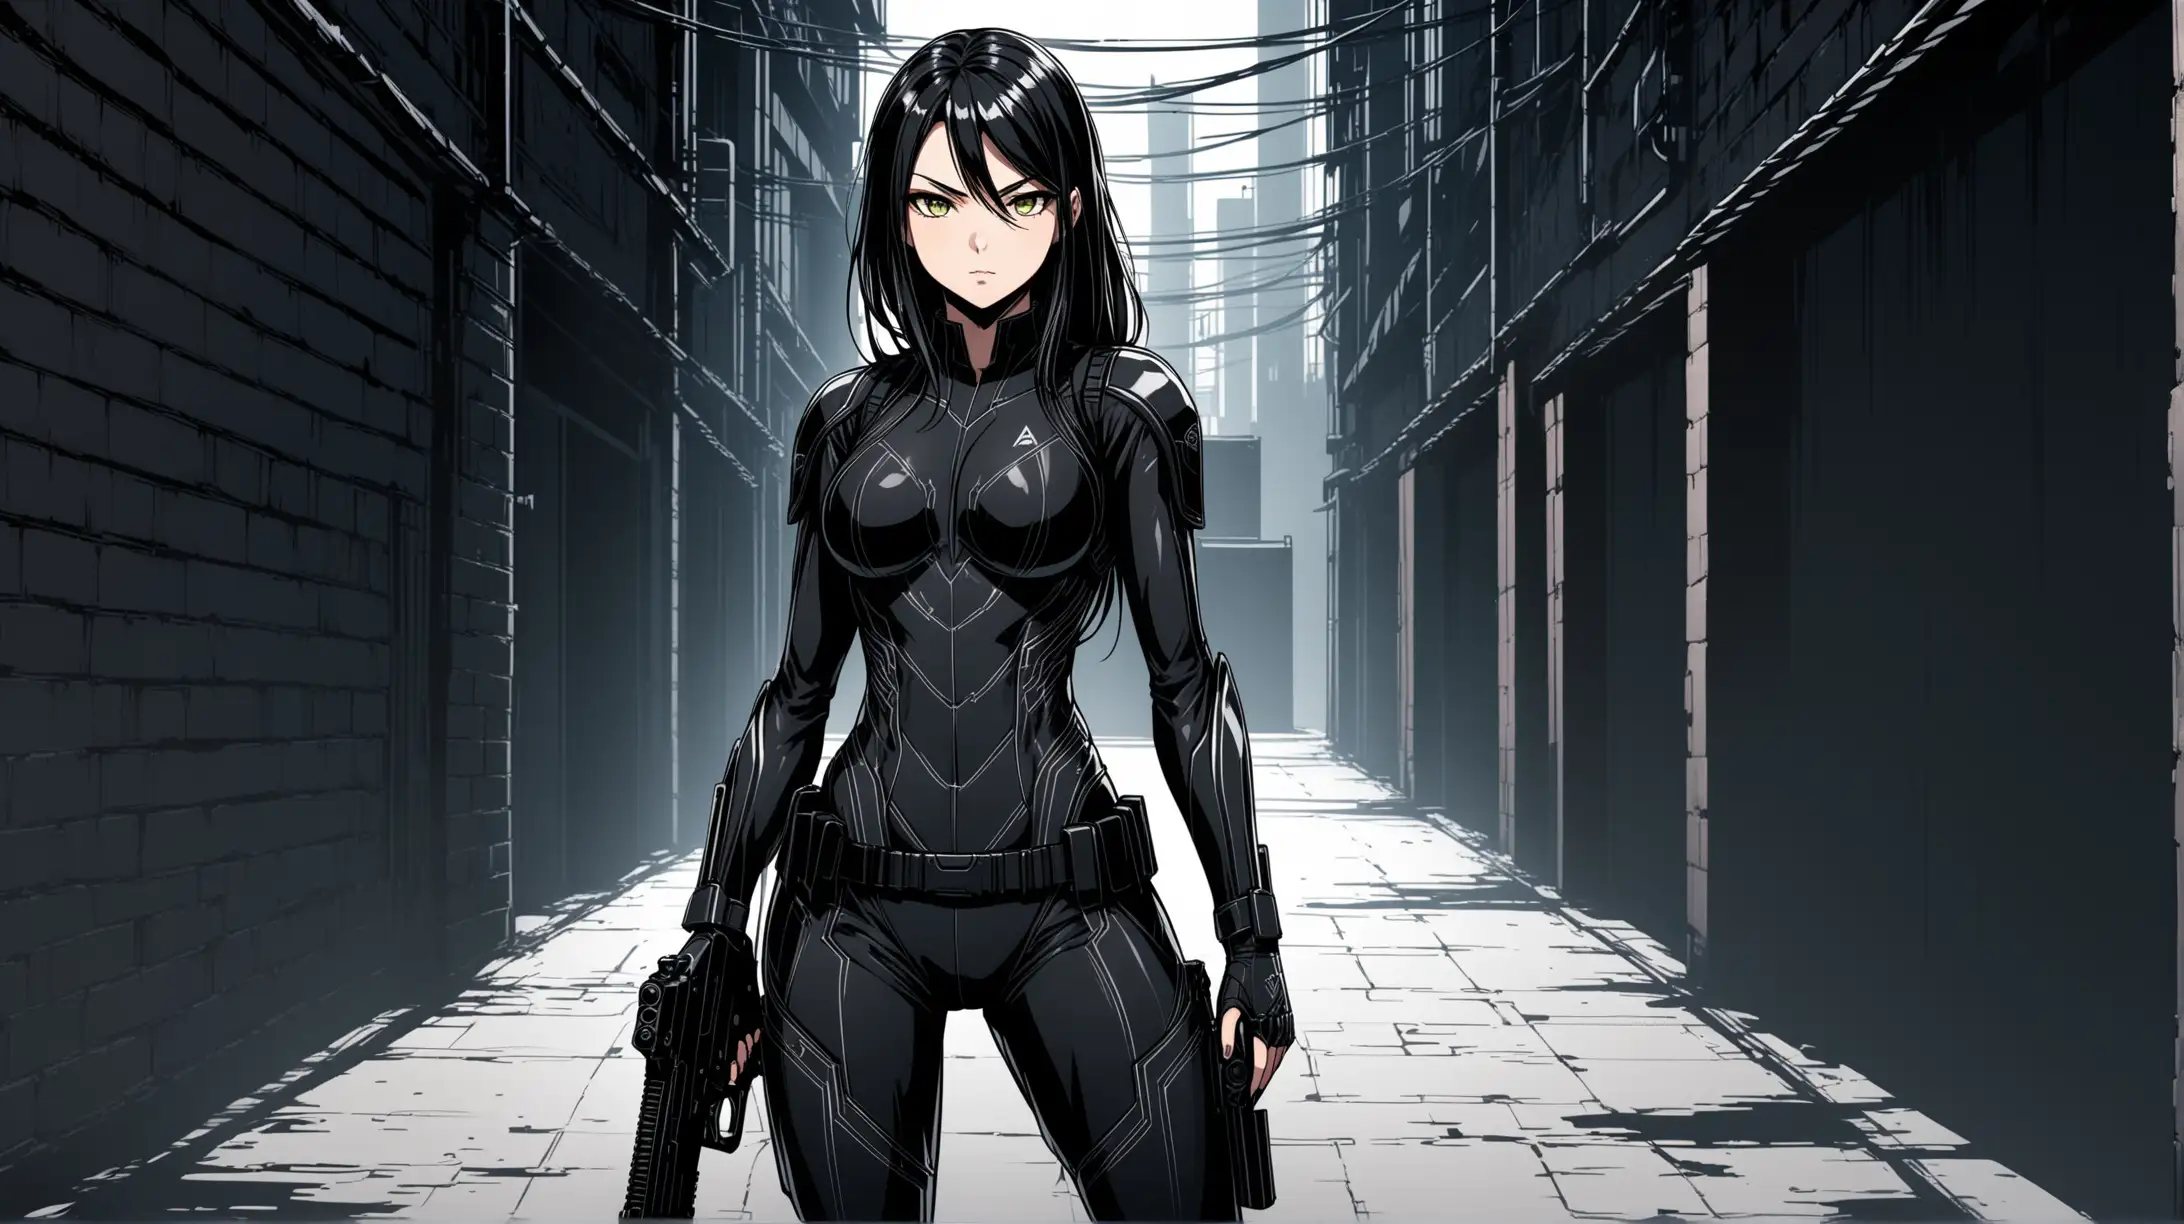 AnimeStyle Female Assassin in a Dark Urban Alleyway